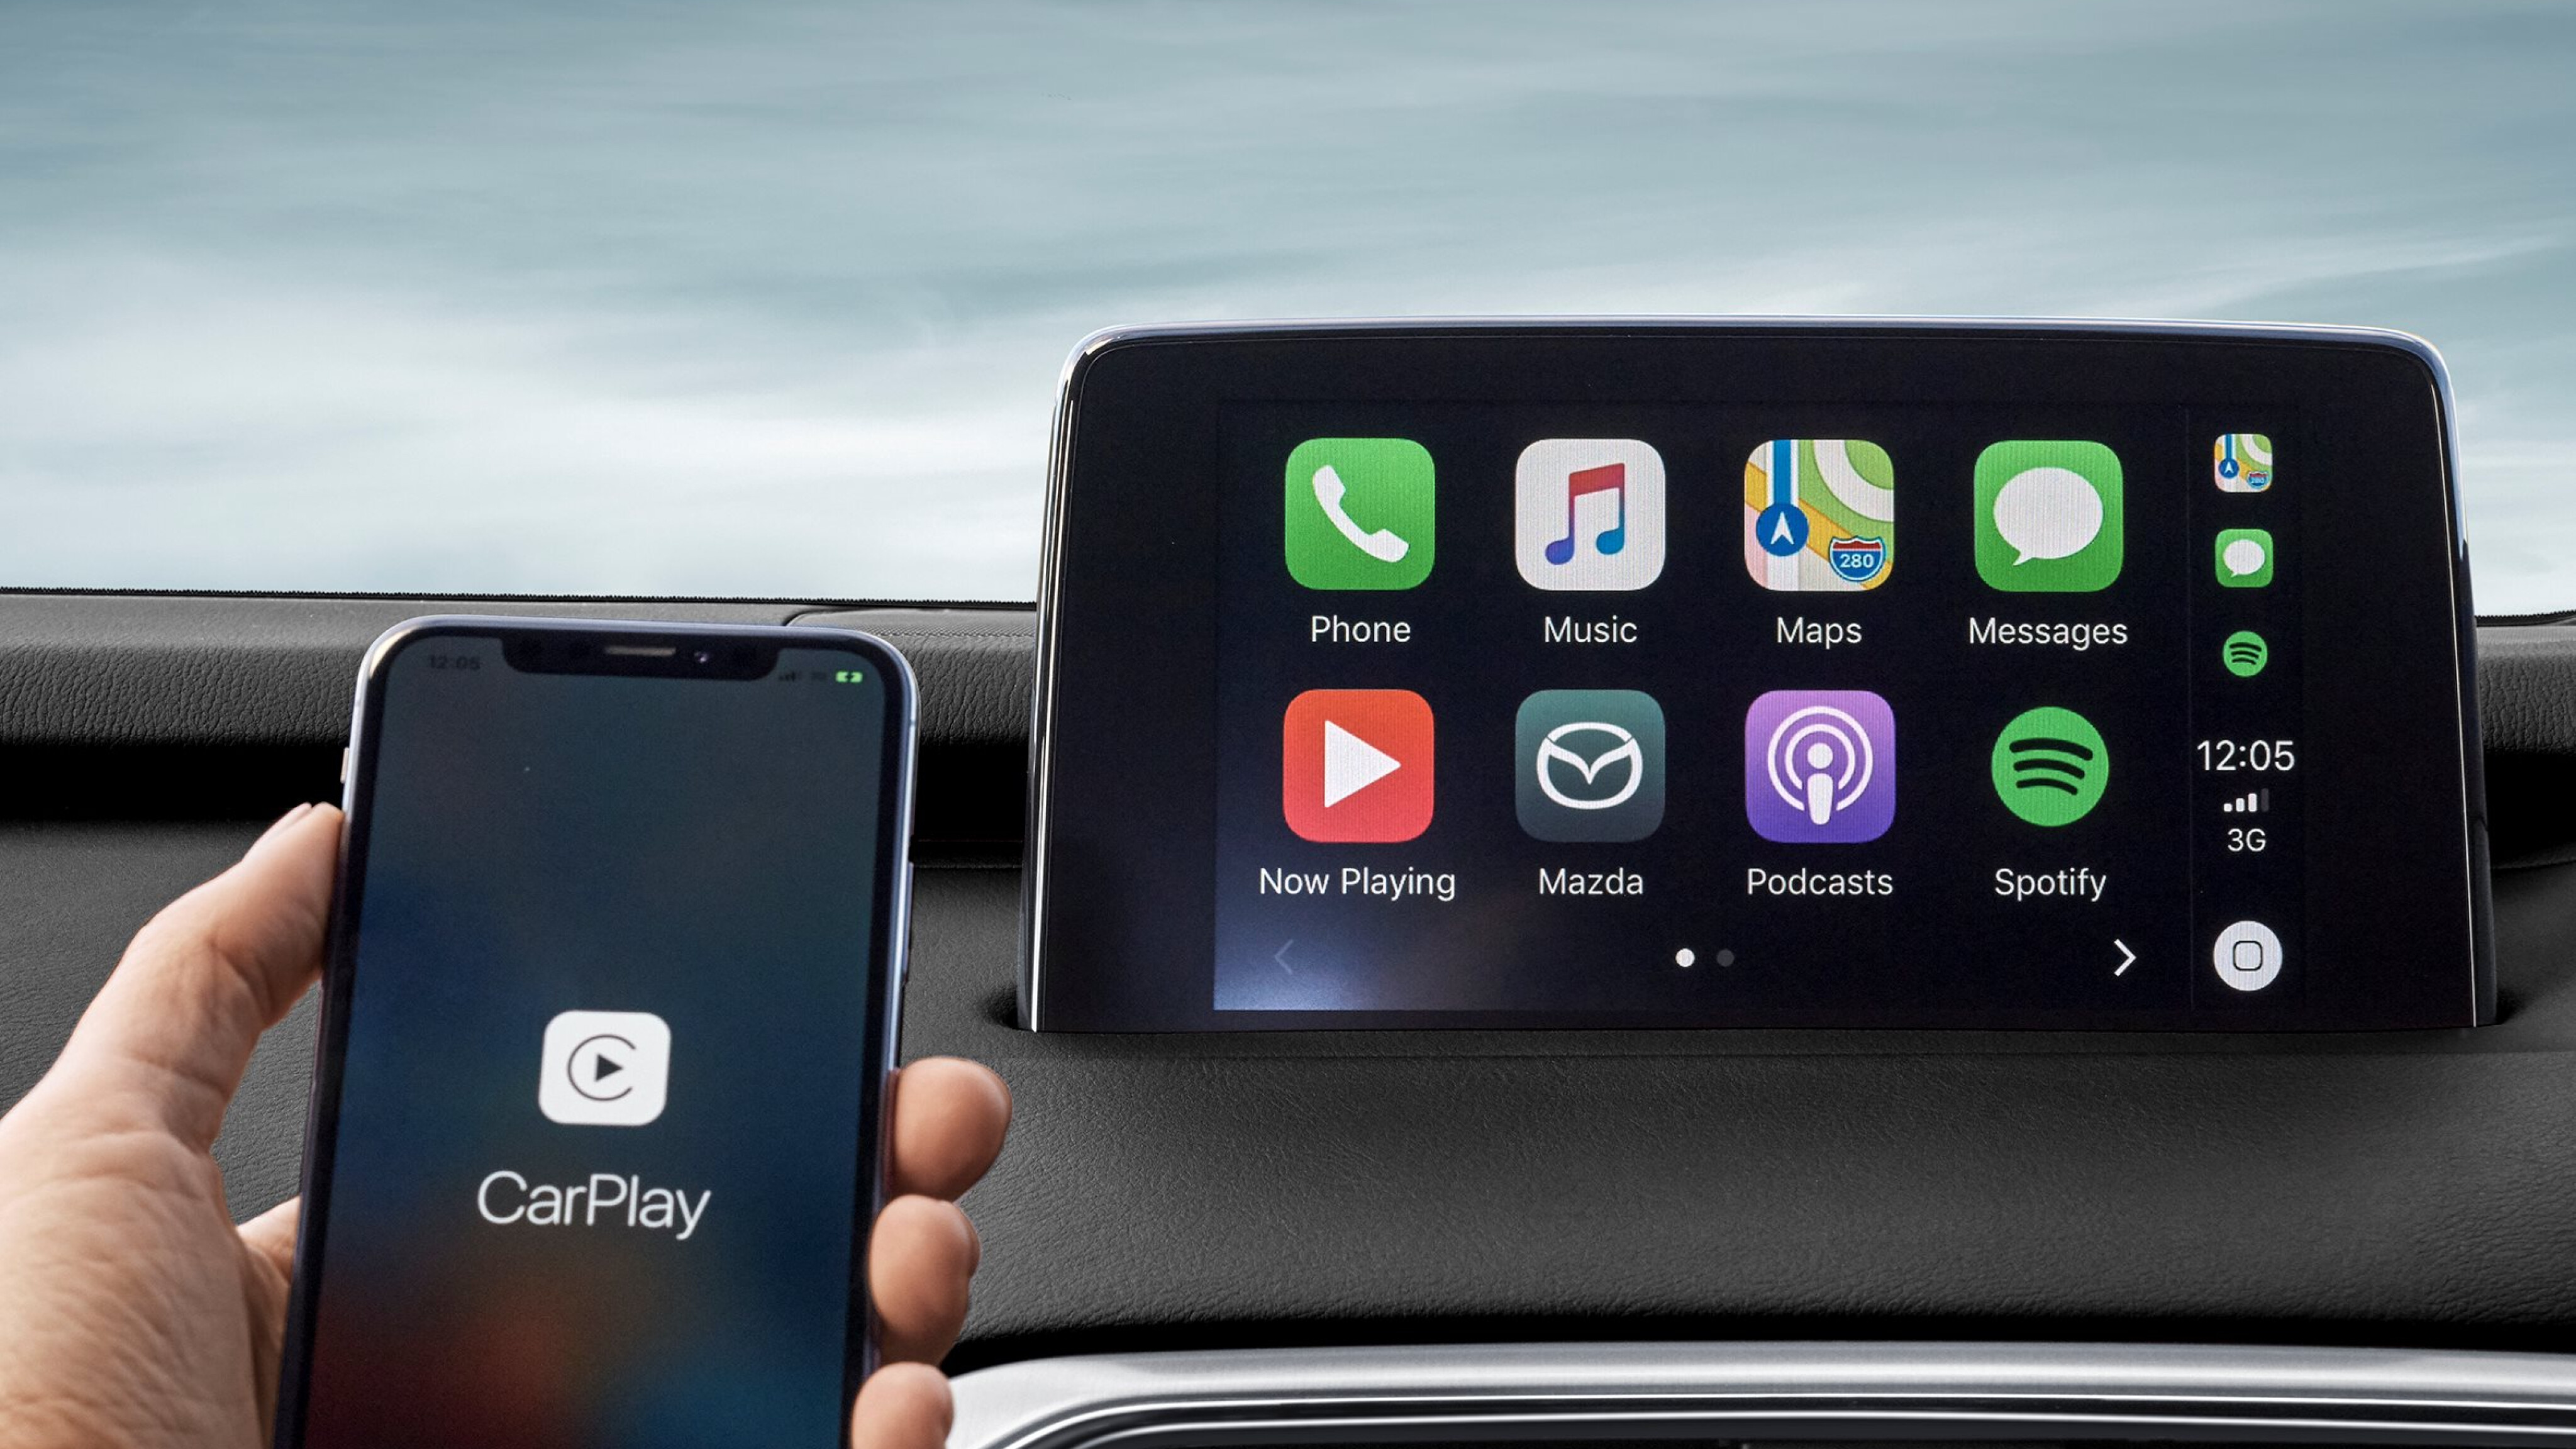 Renault Megane 4,2019, upgrade from radio to small/big display